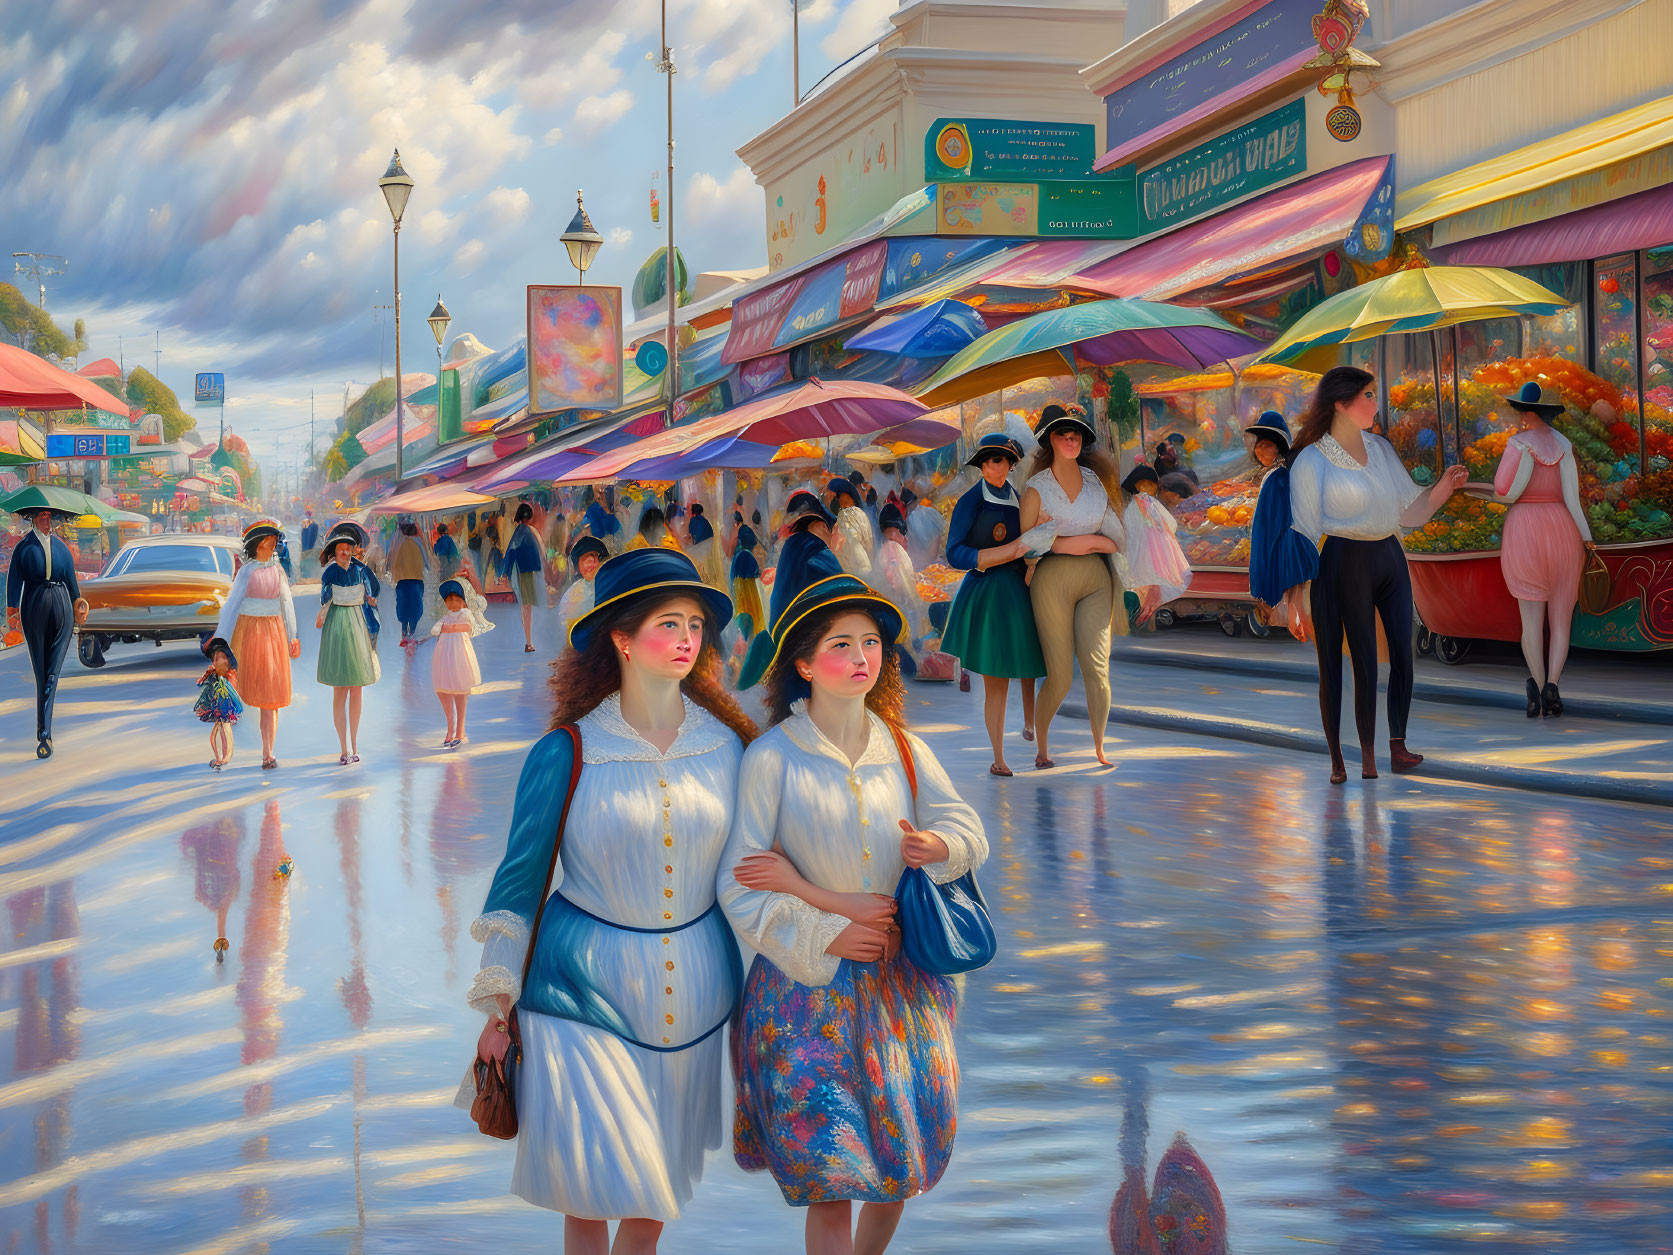 Colorful umbrellas and bustling market in vibrant street scene